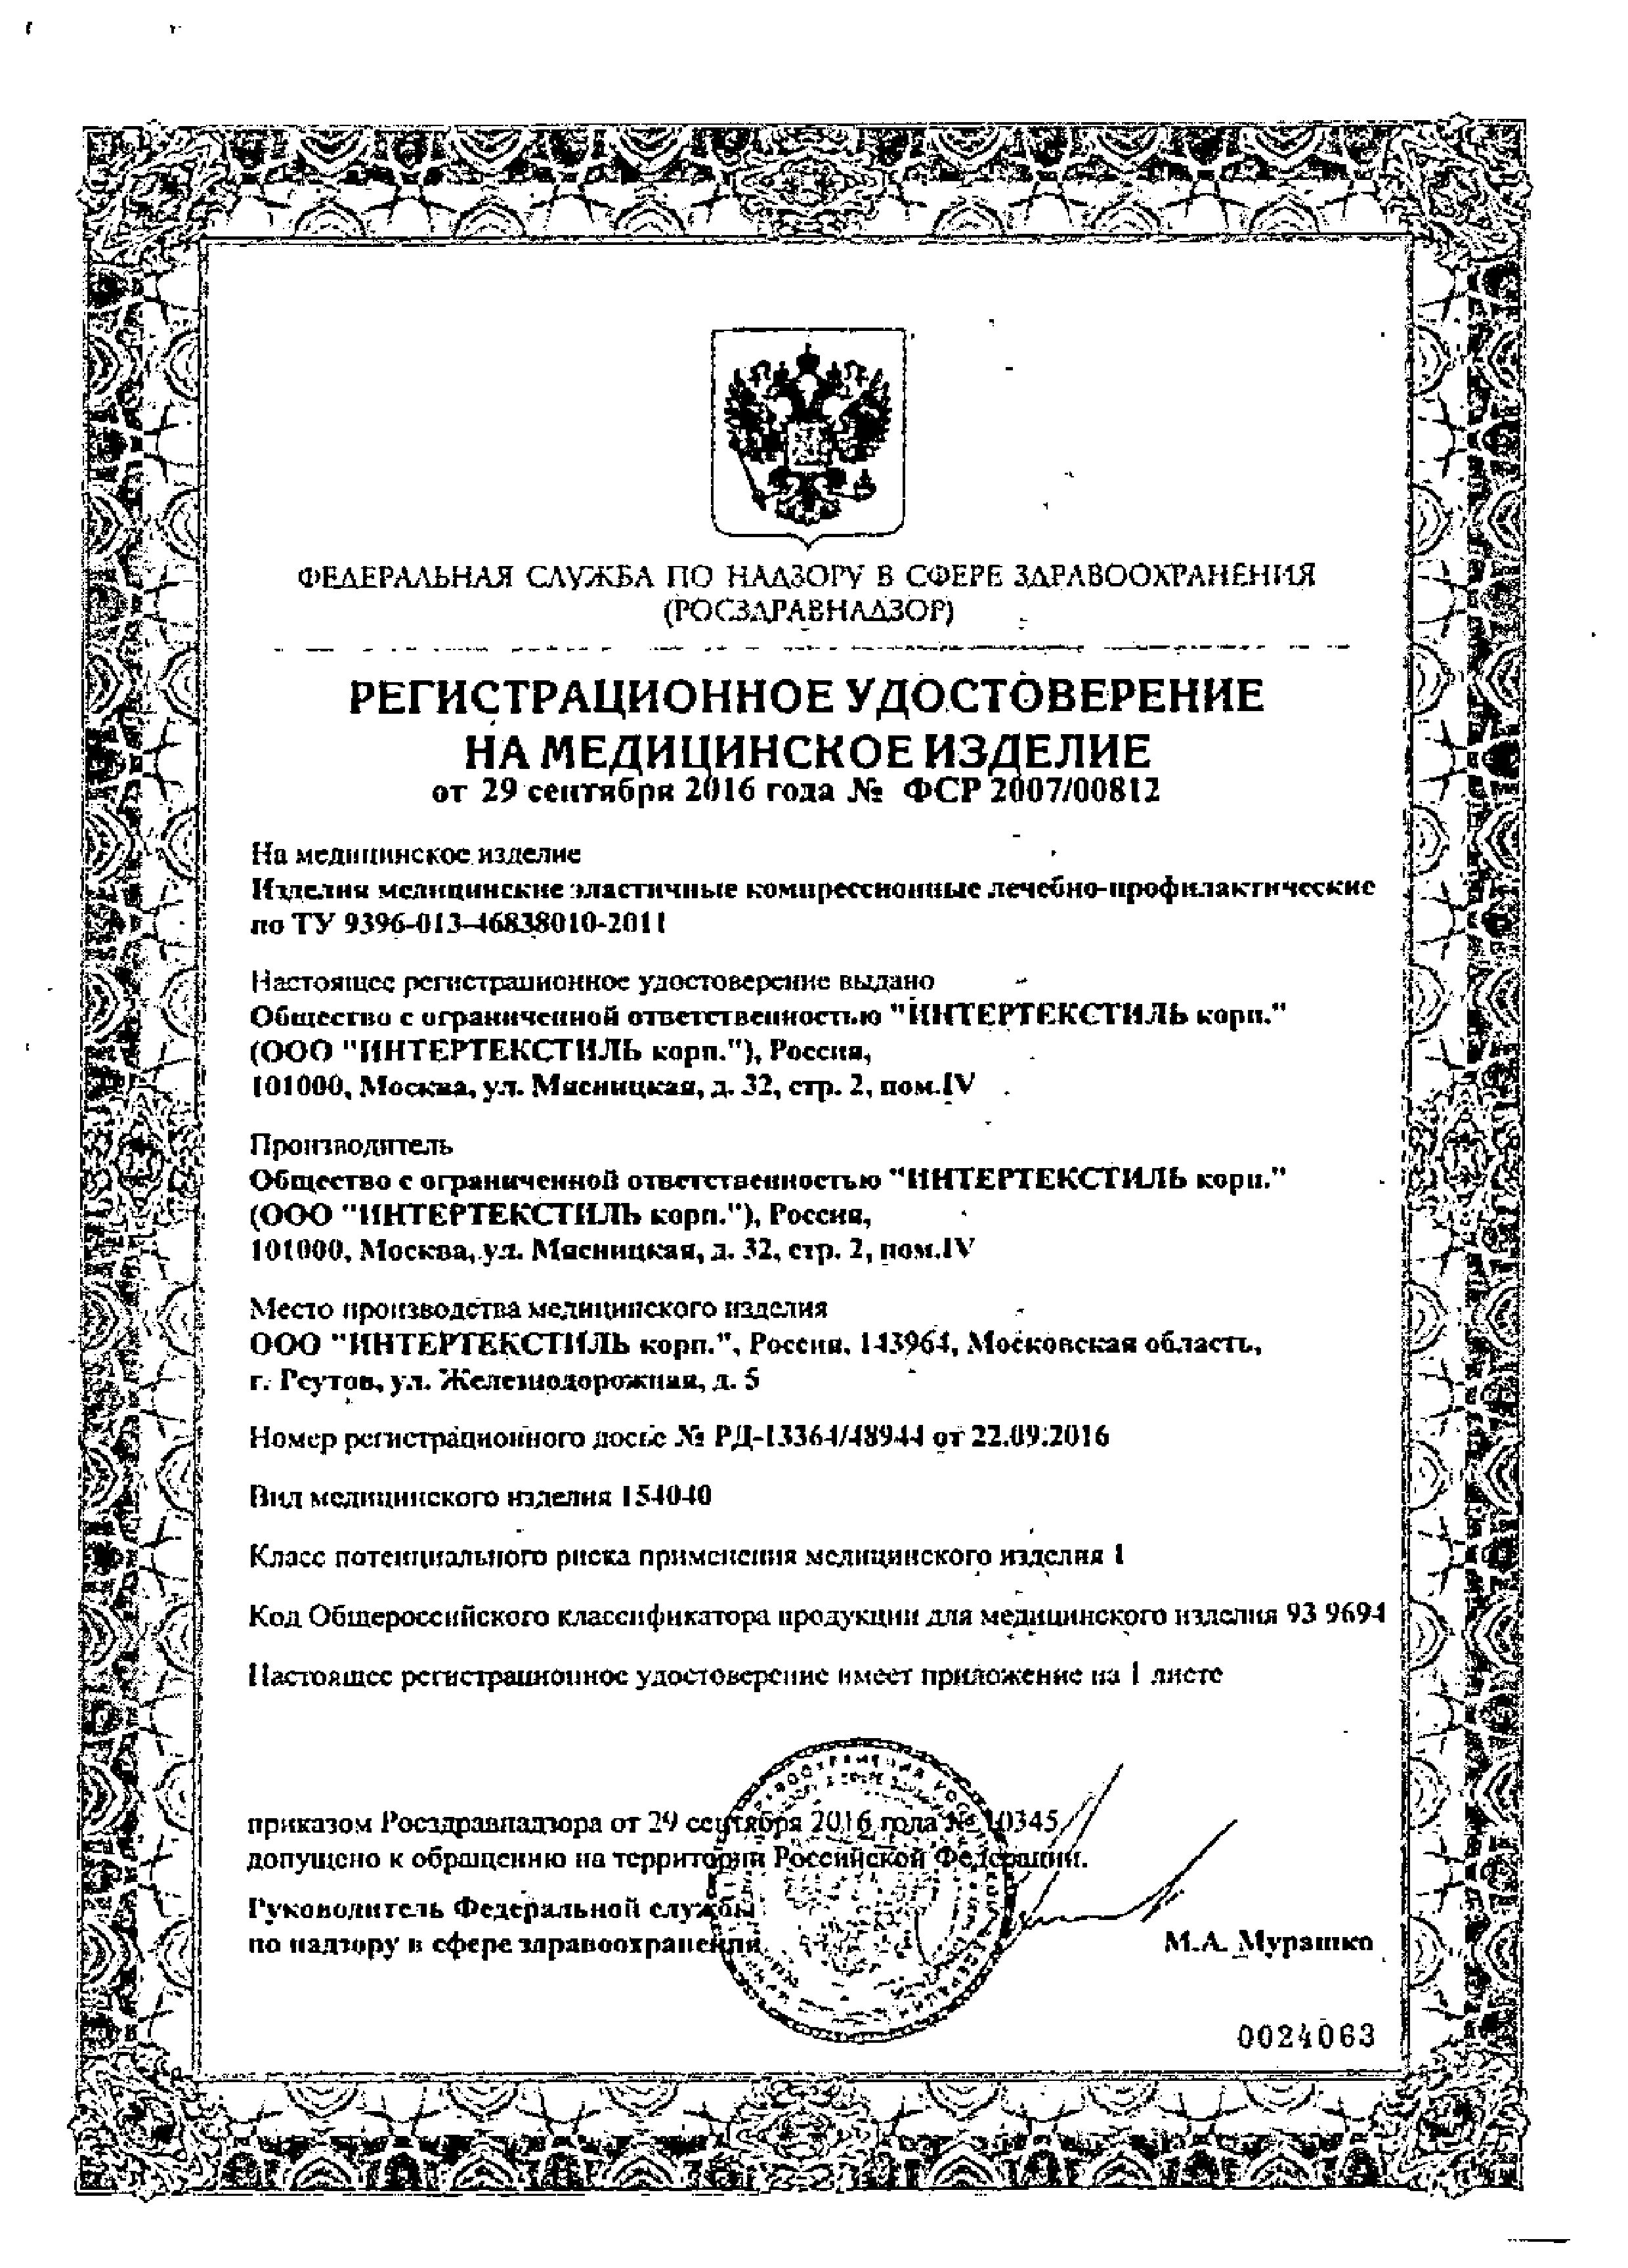 Клинса Чулки антиэмболические сертификат